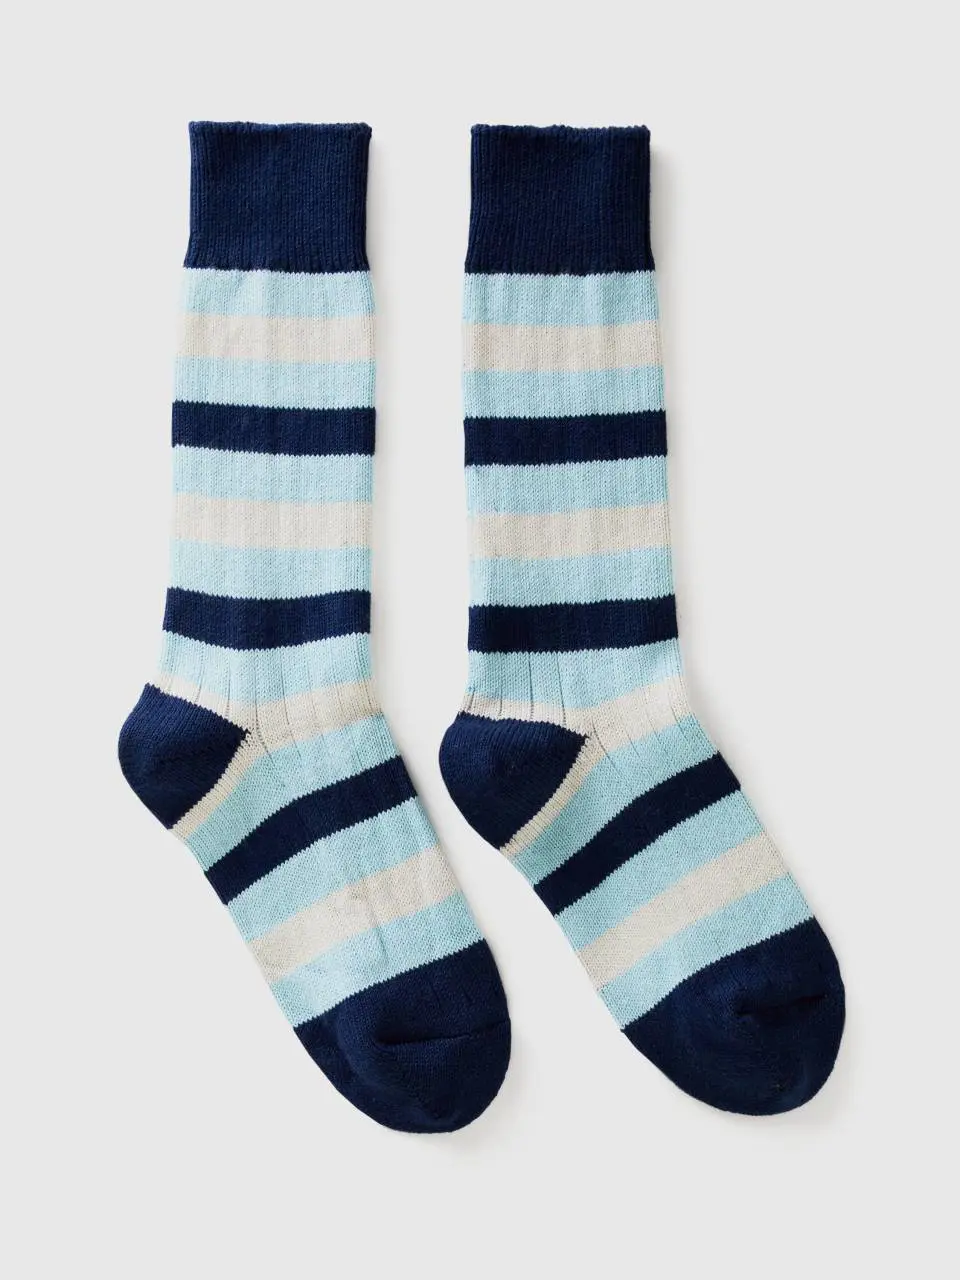 Benetton striped socks. 1